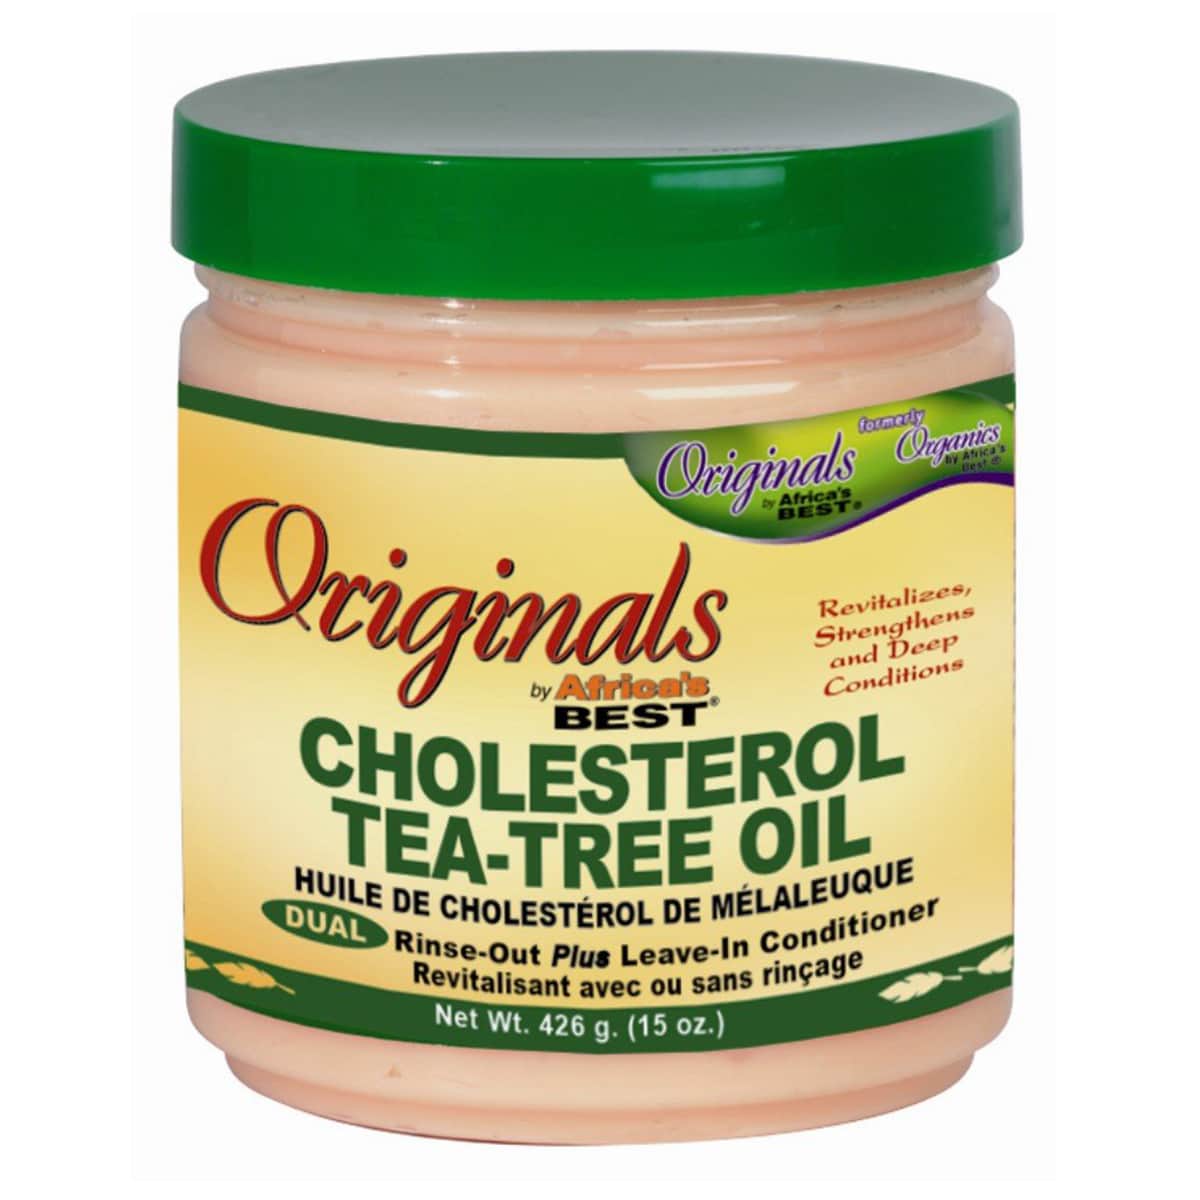 Organics Cholesterol Tea Tree Oil Dual Conditioner - 426 gm